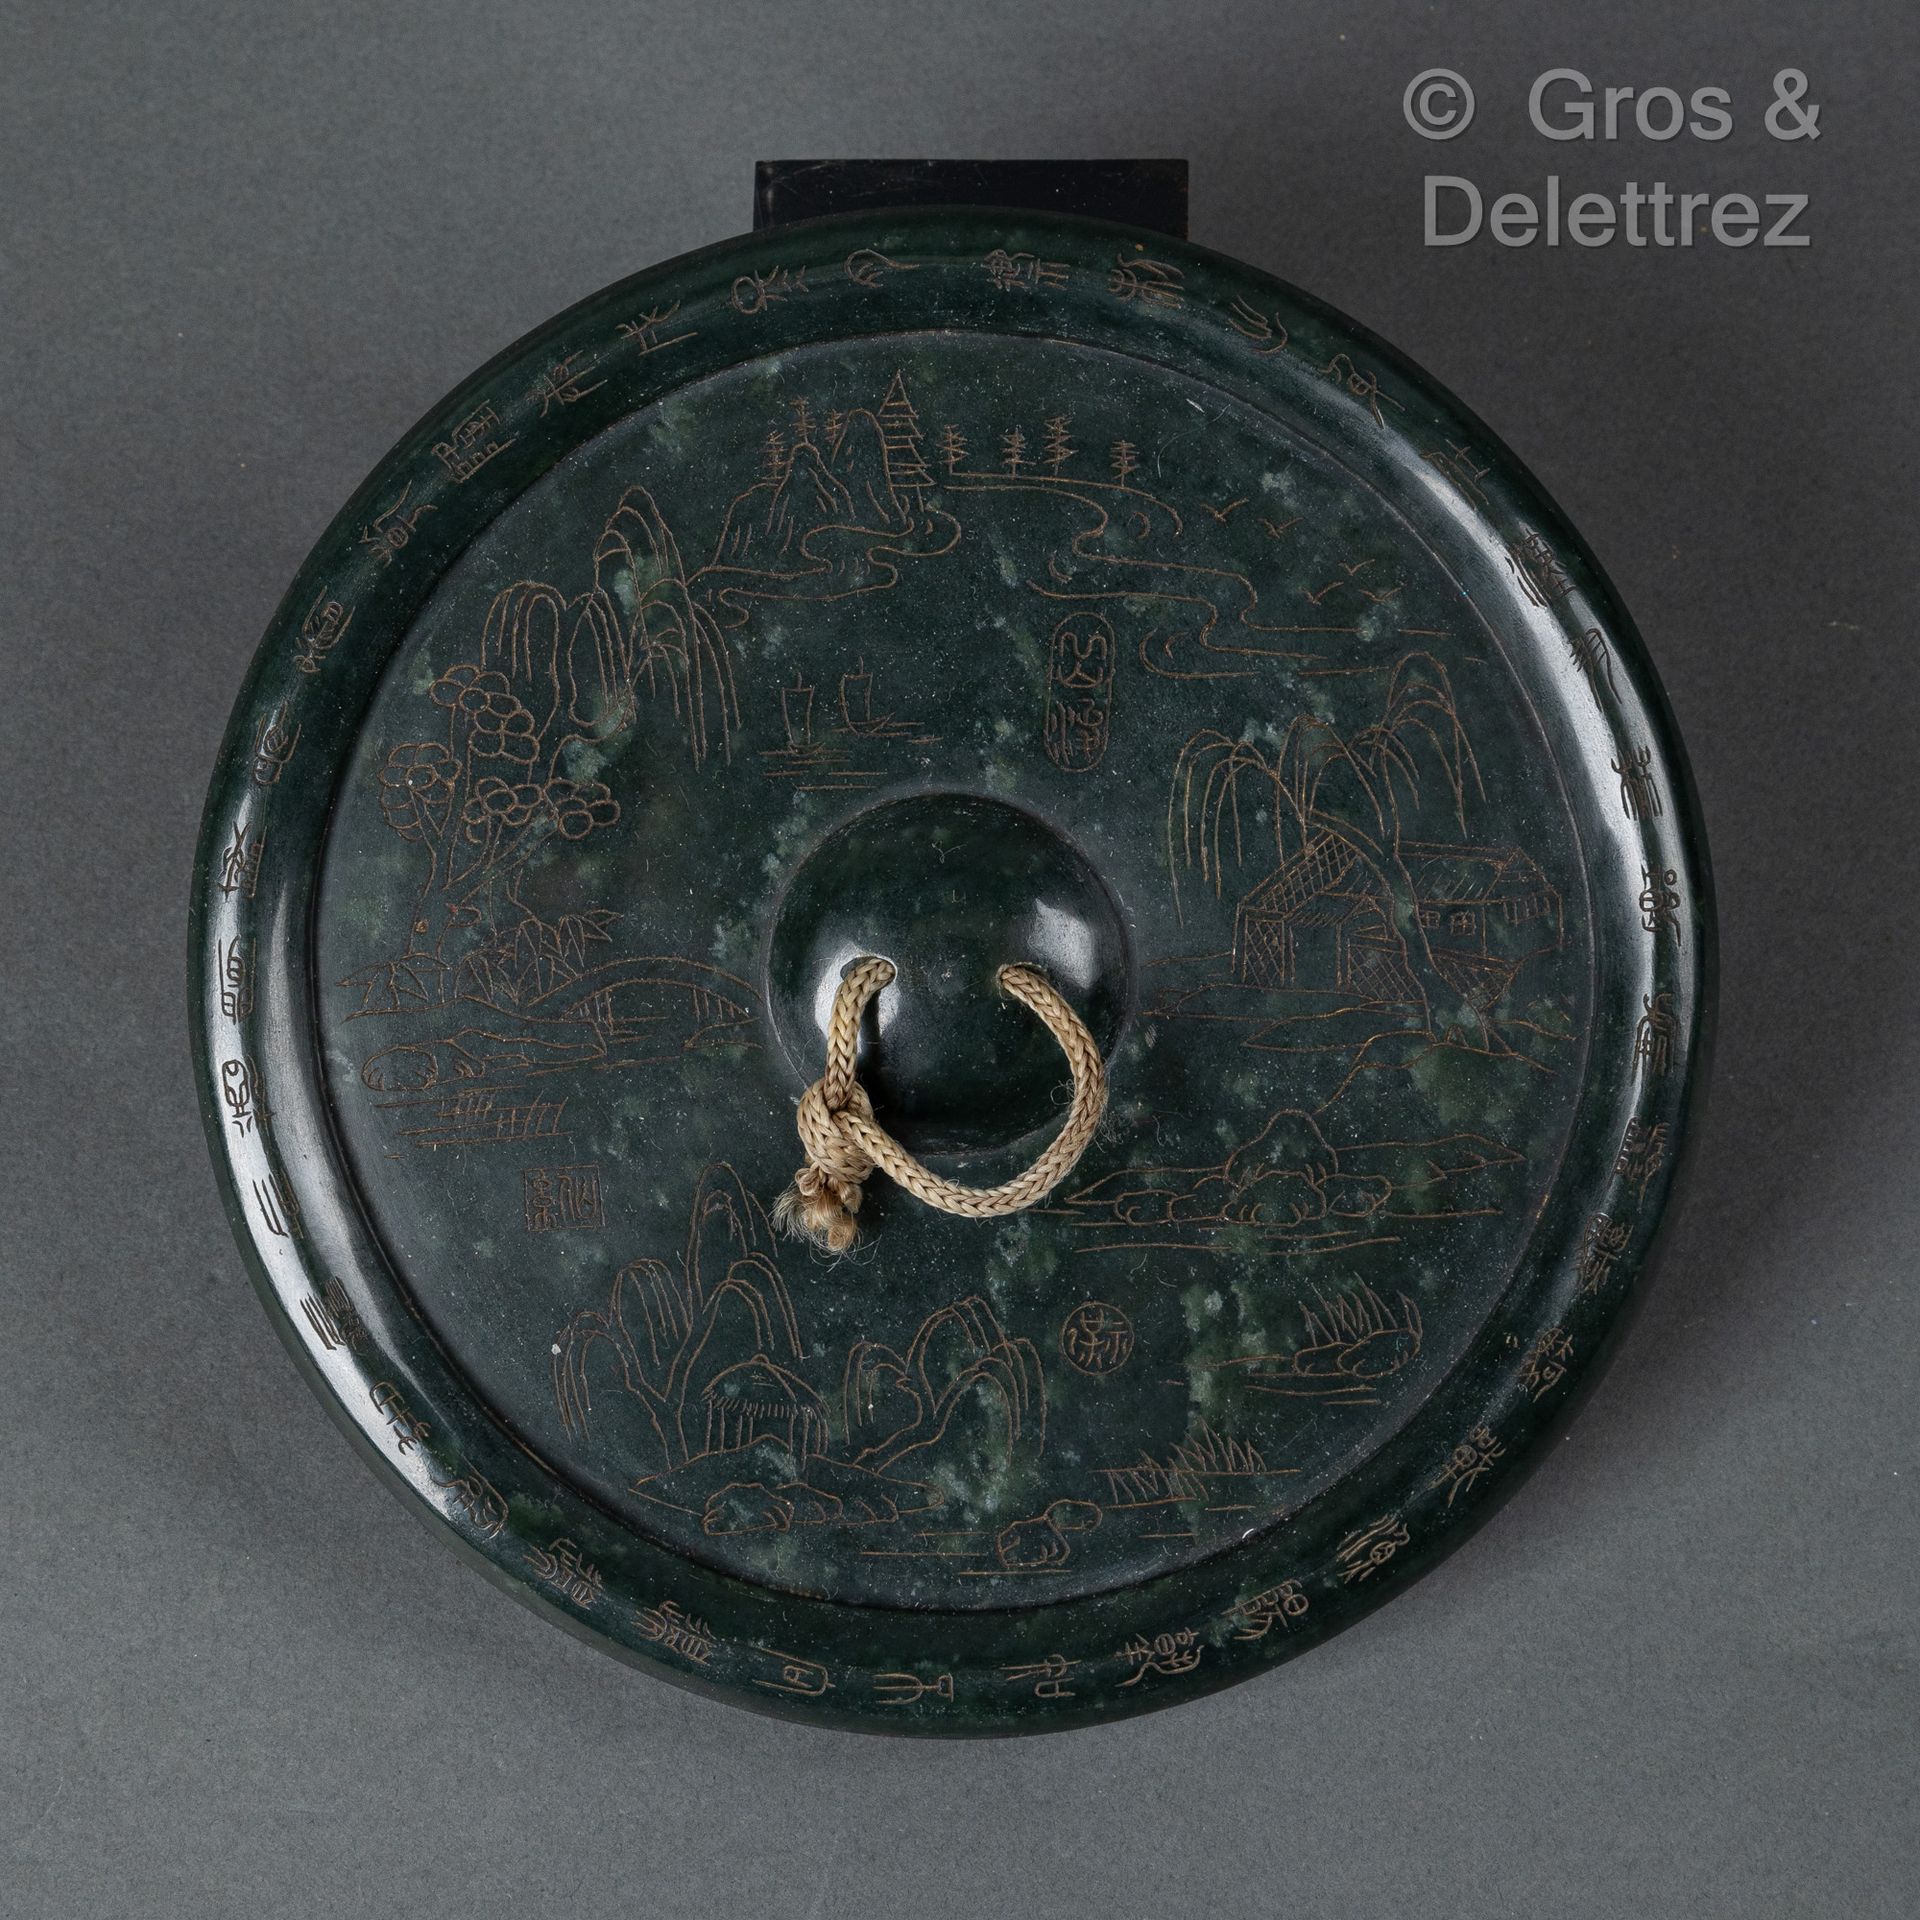 Null China, 20. Jahrhundert
Kreisförmige Platte aus grünem Serpentin mit inkrust&hellip;